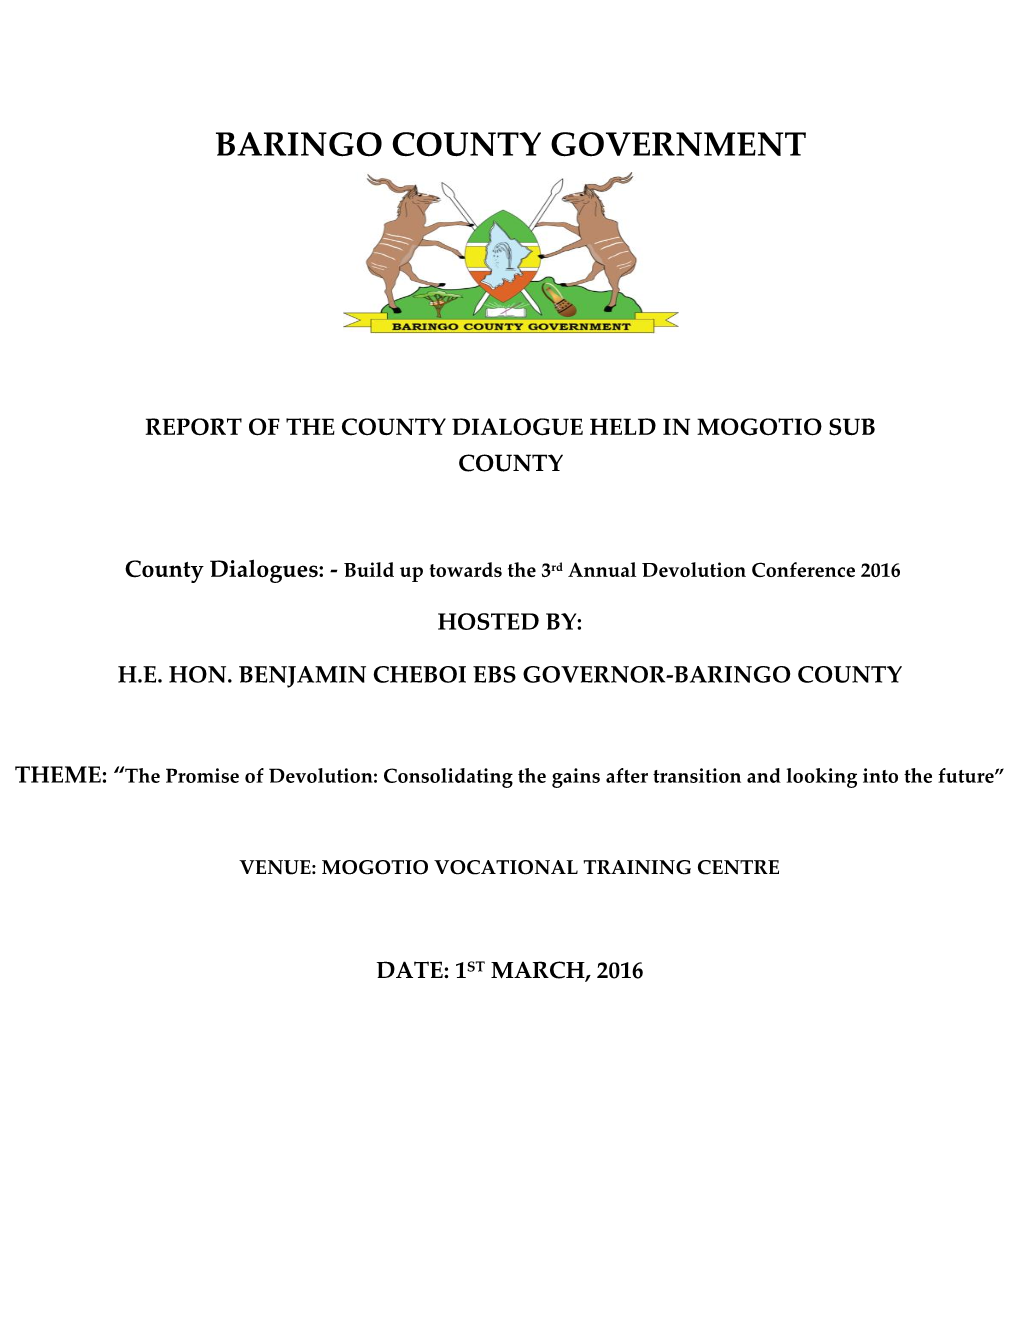 Baringo County Government